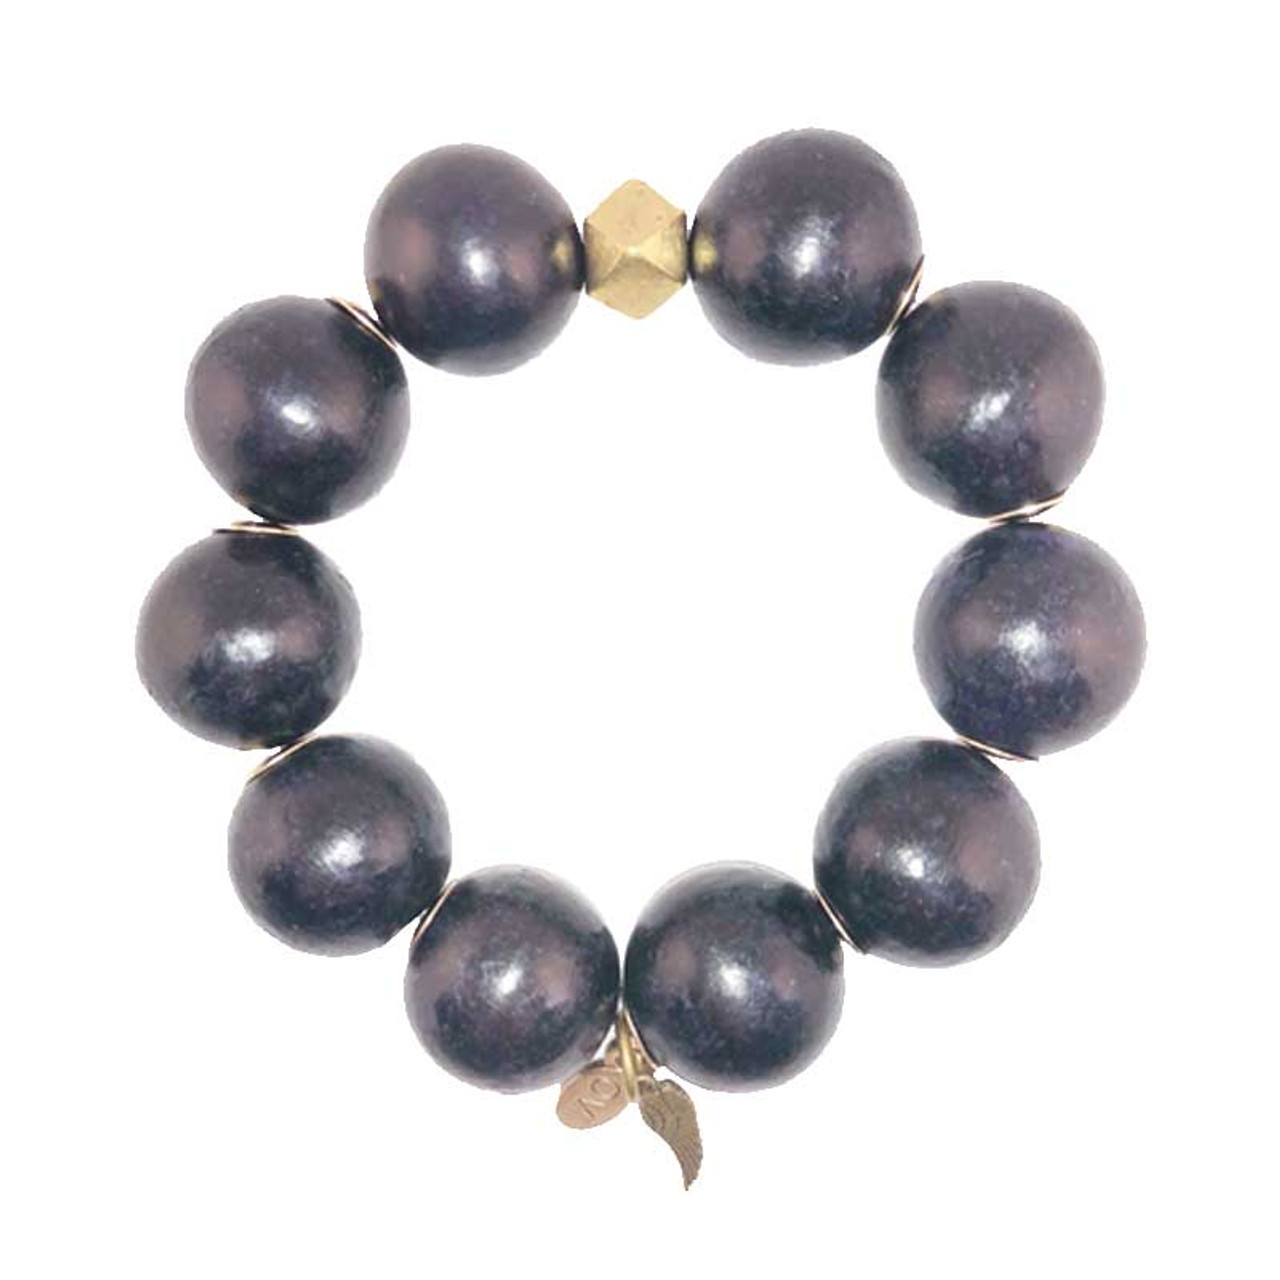 Black Wood Big Bead Bracelet with Gold Geometric Beads-Wholesale 20mm